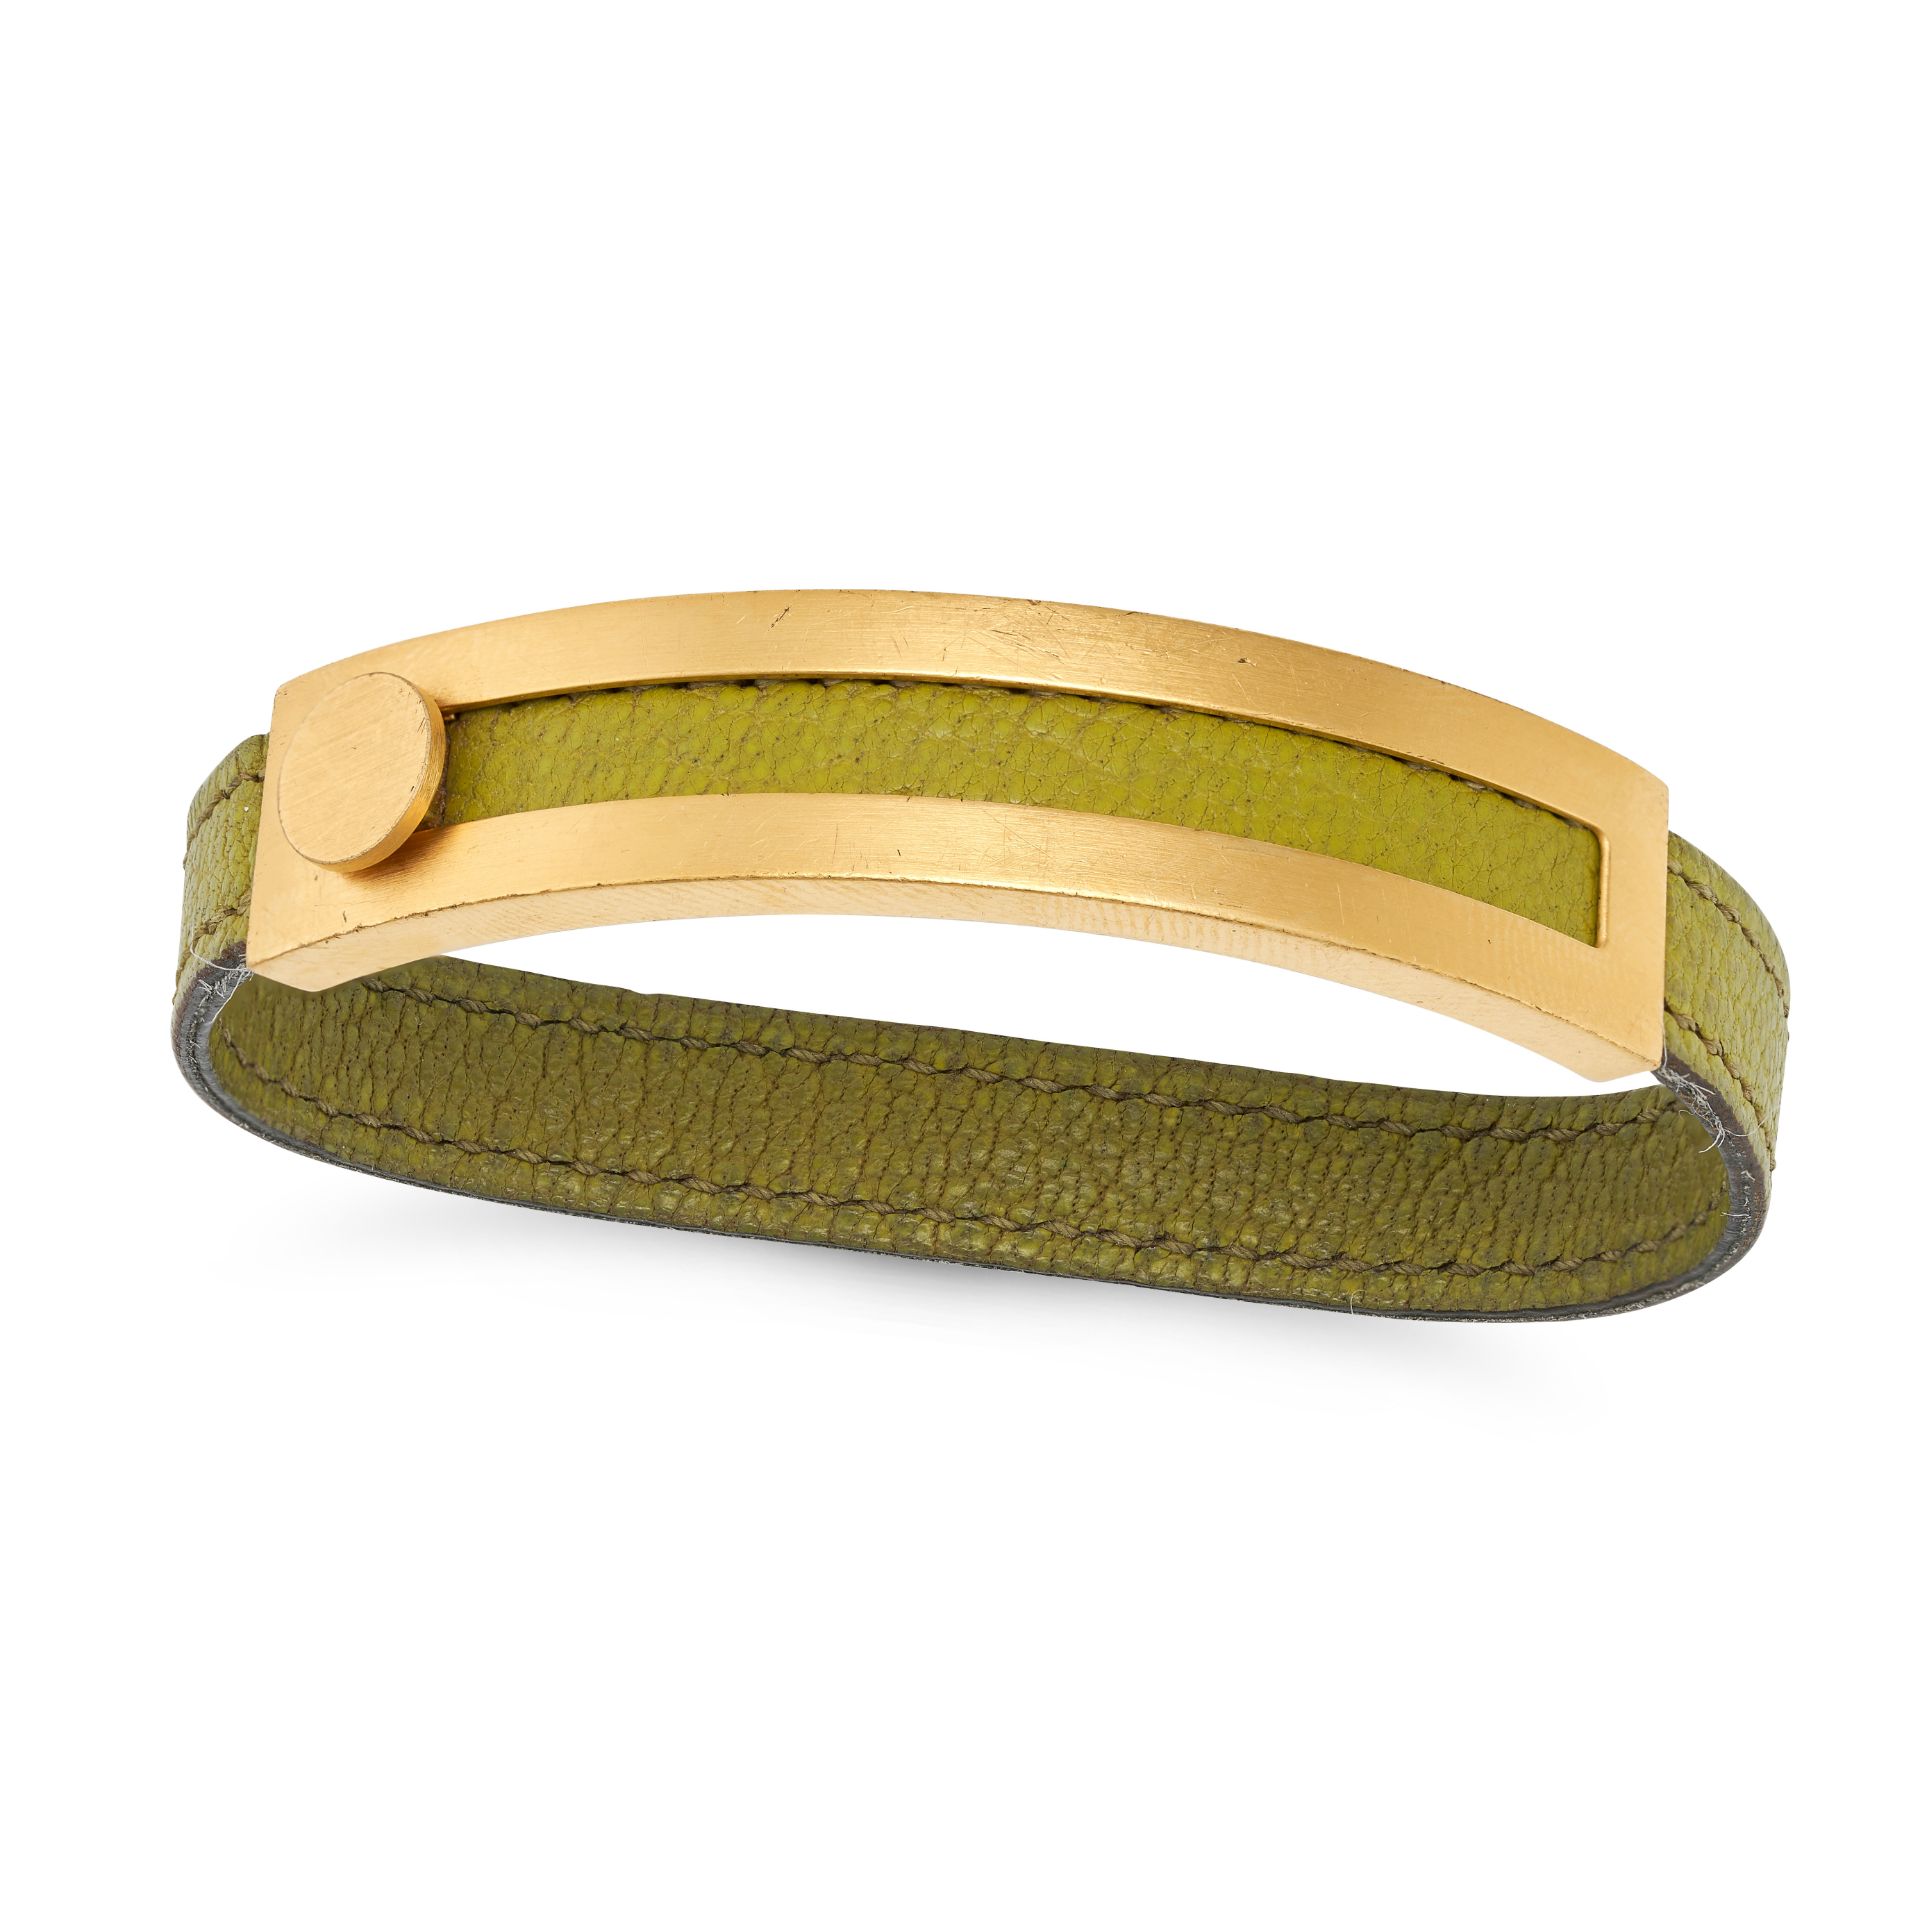 NO RESERVE - HERMES, A SLIDING BRACELET comprising a green leather strap with a sliding bronze pl...